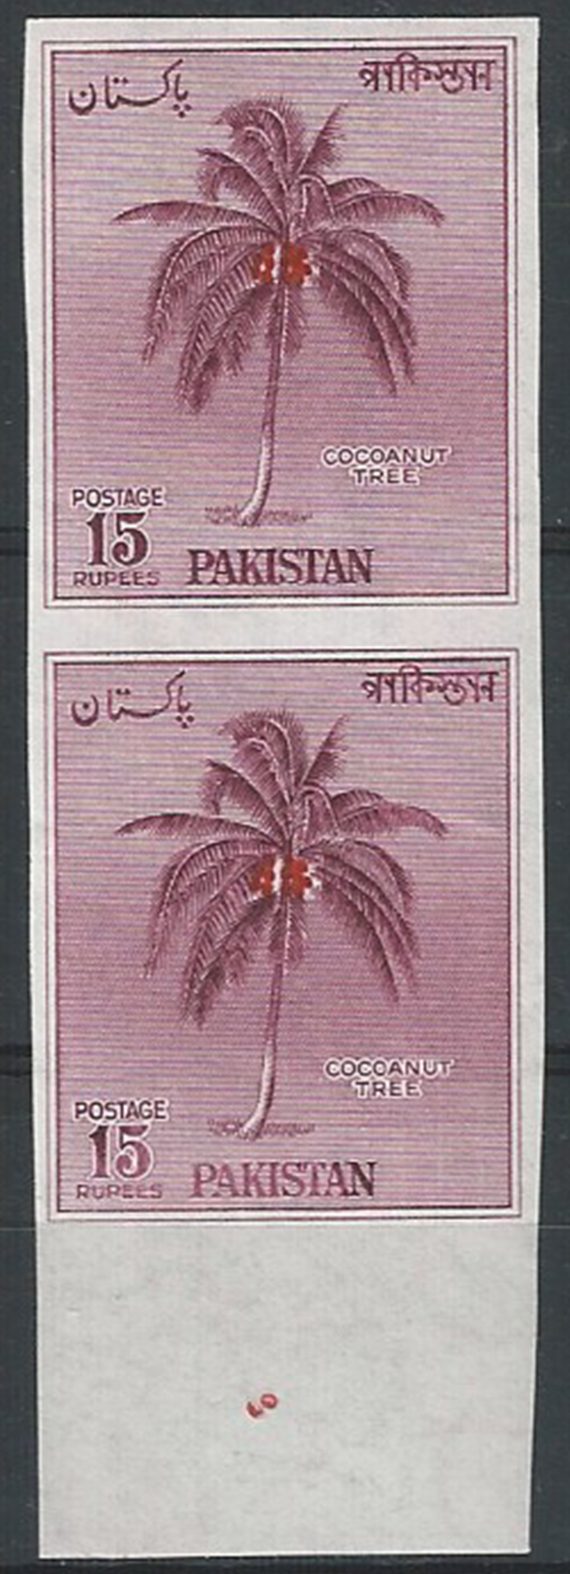 1979 Pakistan palma da cocco varietà MNH SG. n. 209a